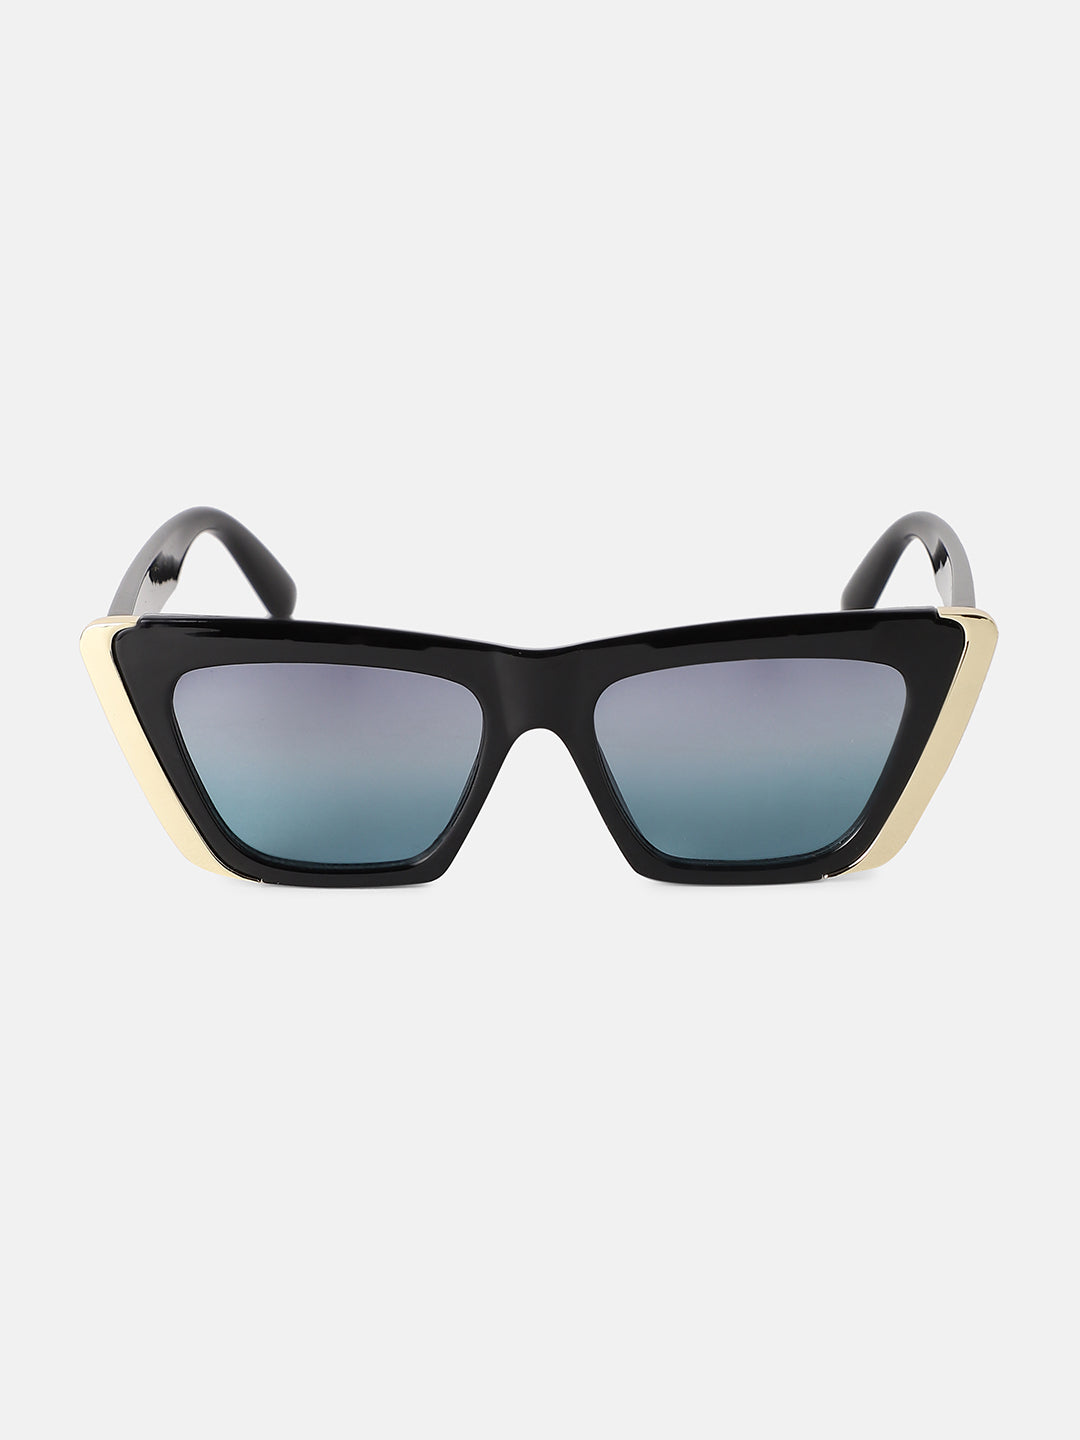 Women's Full Rim Cateye Sunglasses - Black